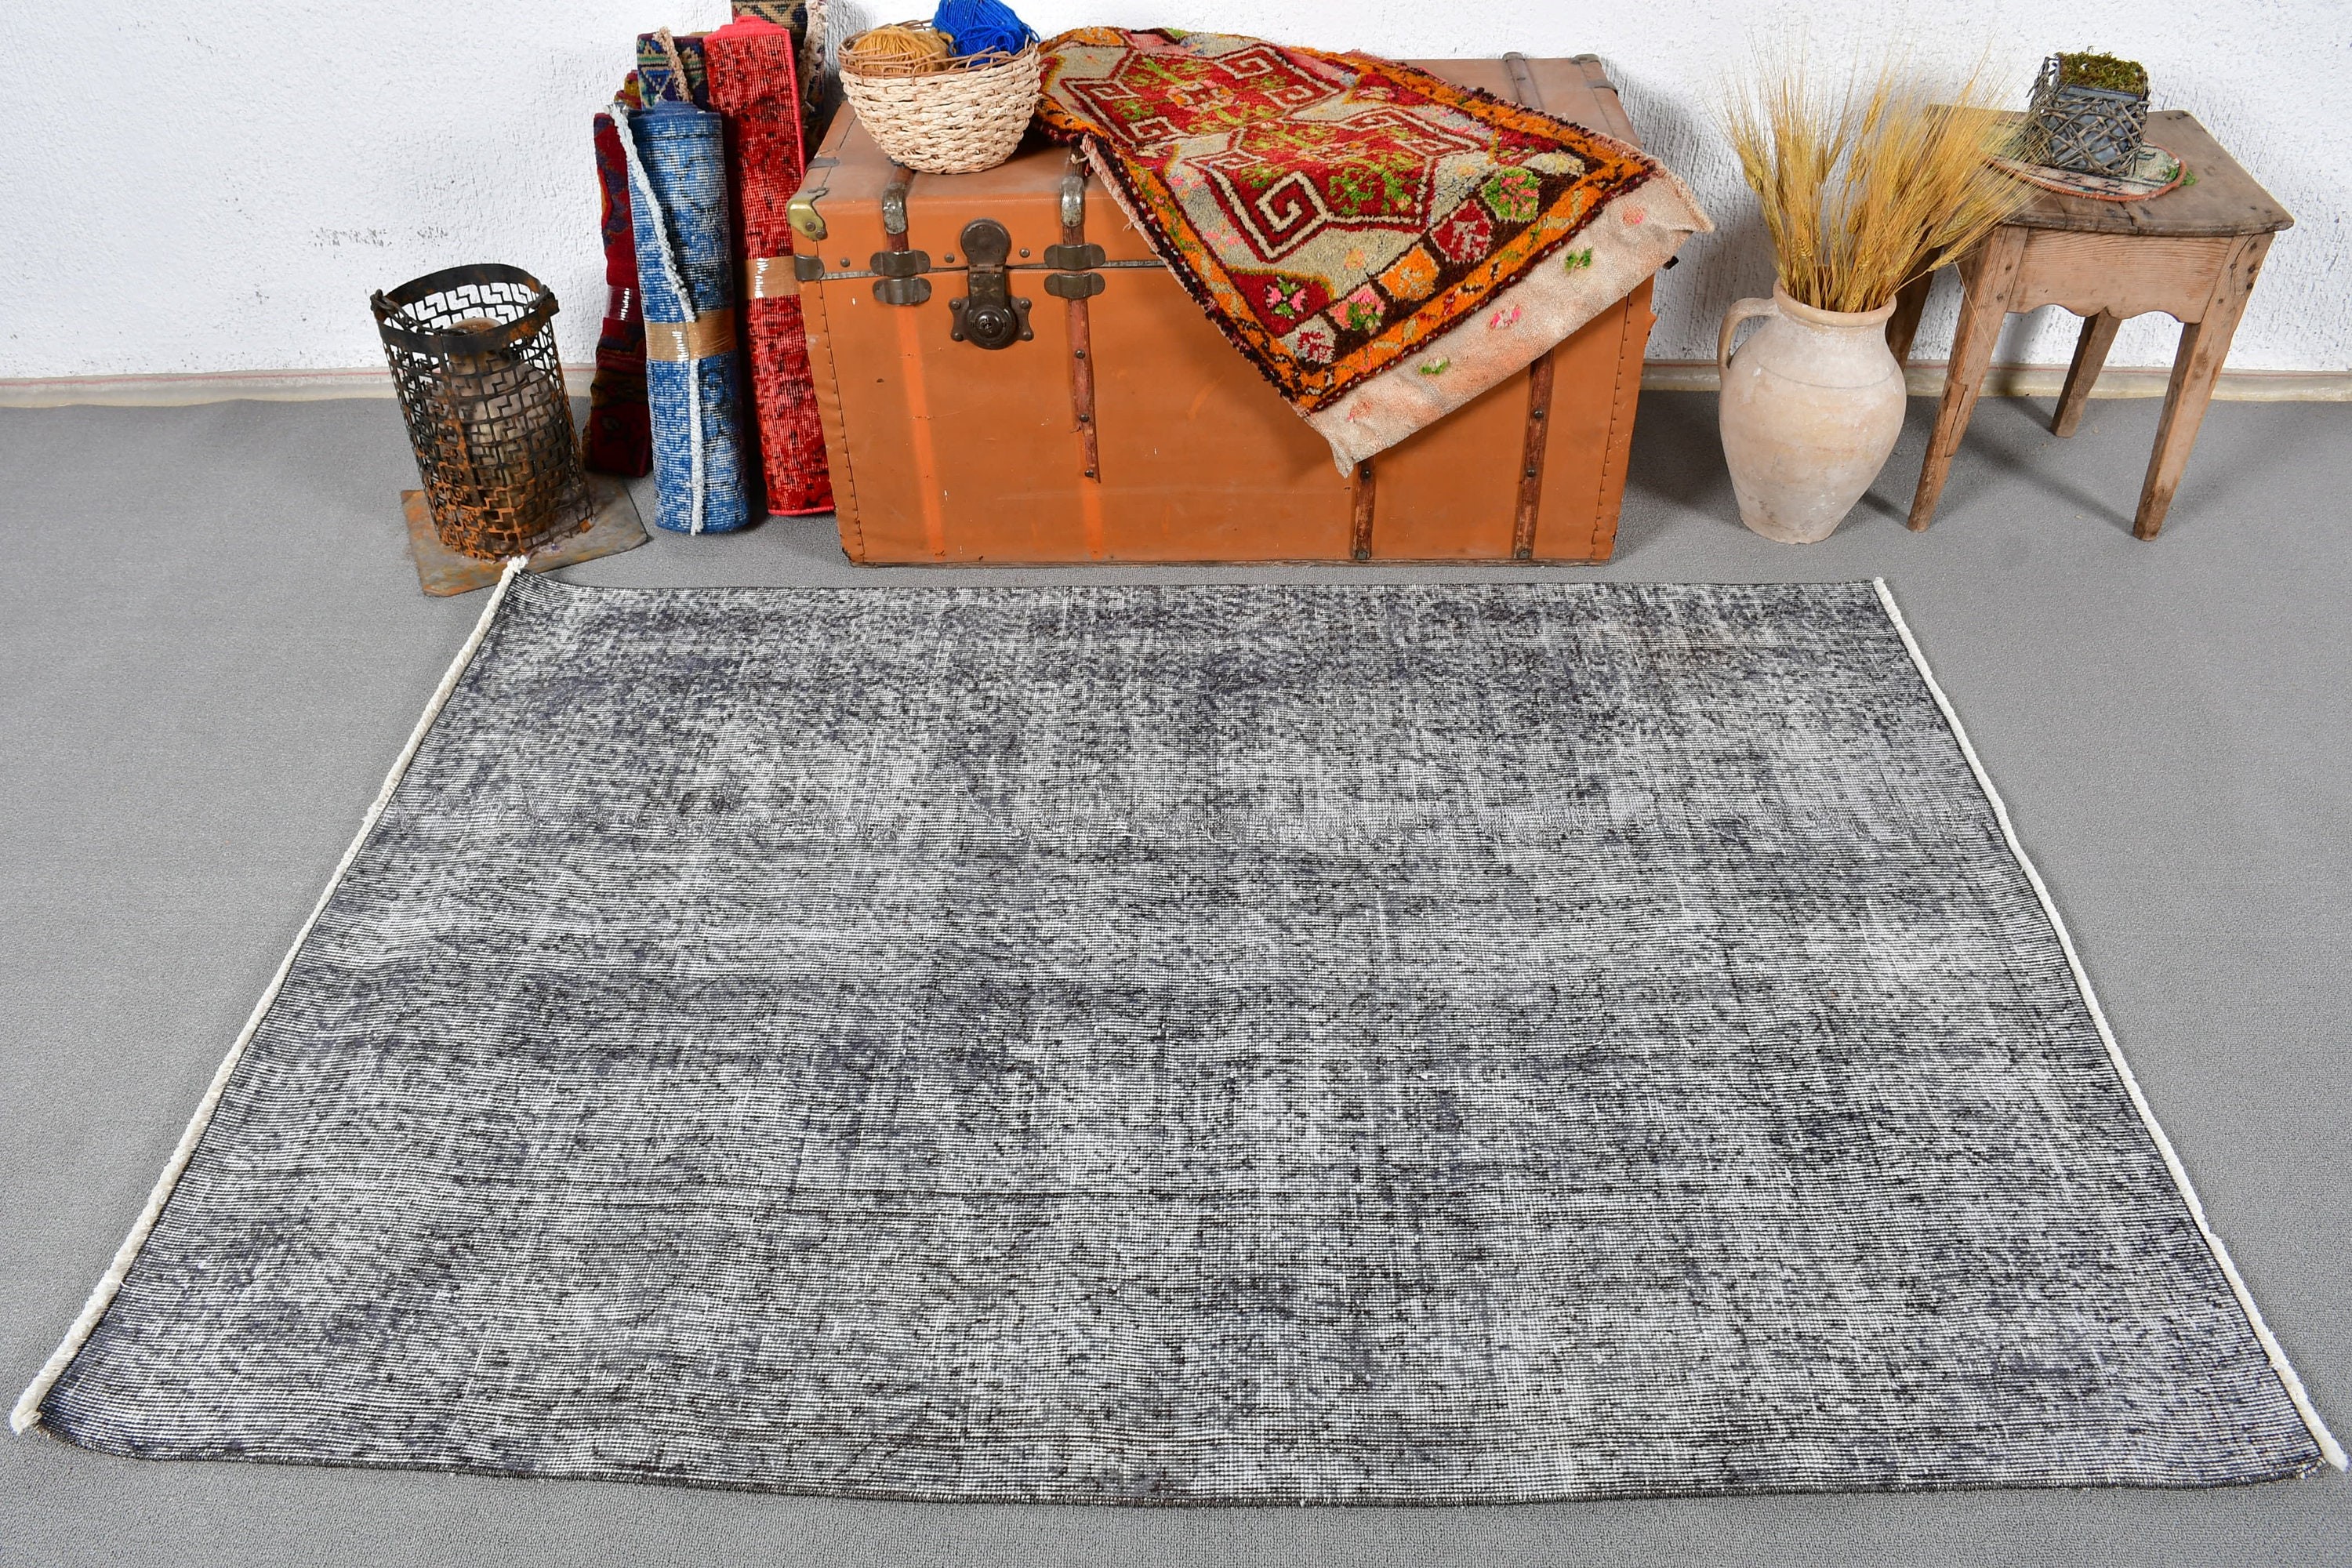 Turkish Rug, Rugs for Entry, Floor Rug, Kitchen Rugs, Vintage Decor Rugs, Vintage Rug, 4x5.8 ft Accent Rug, Bedroom Rug, Gray Antique Rugs